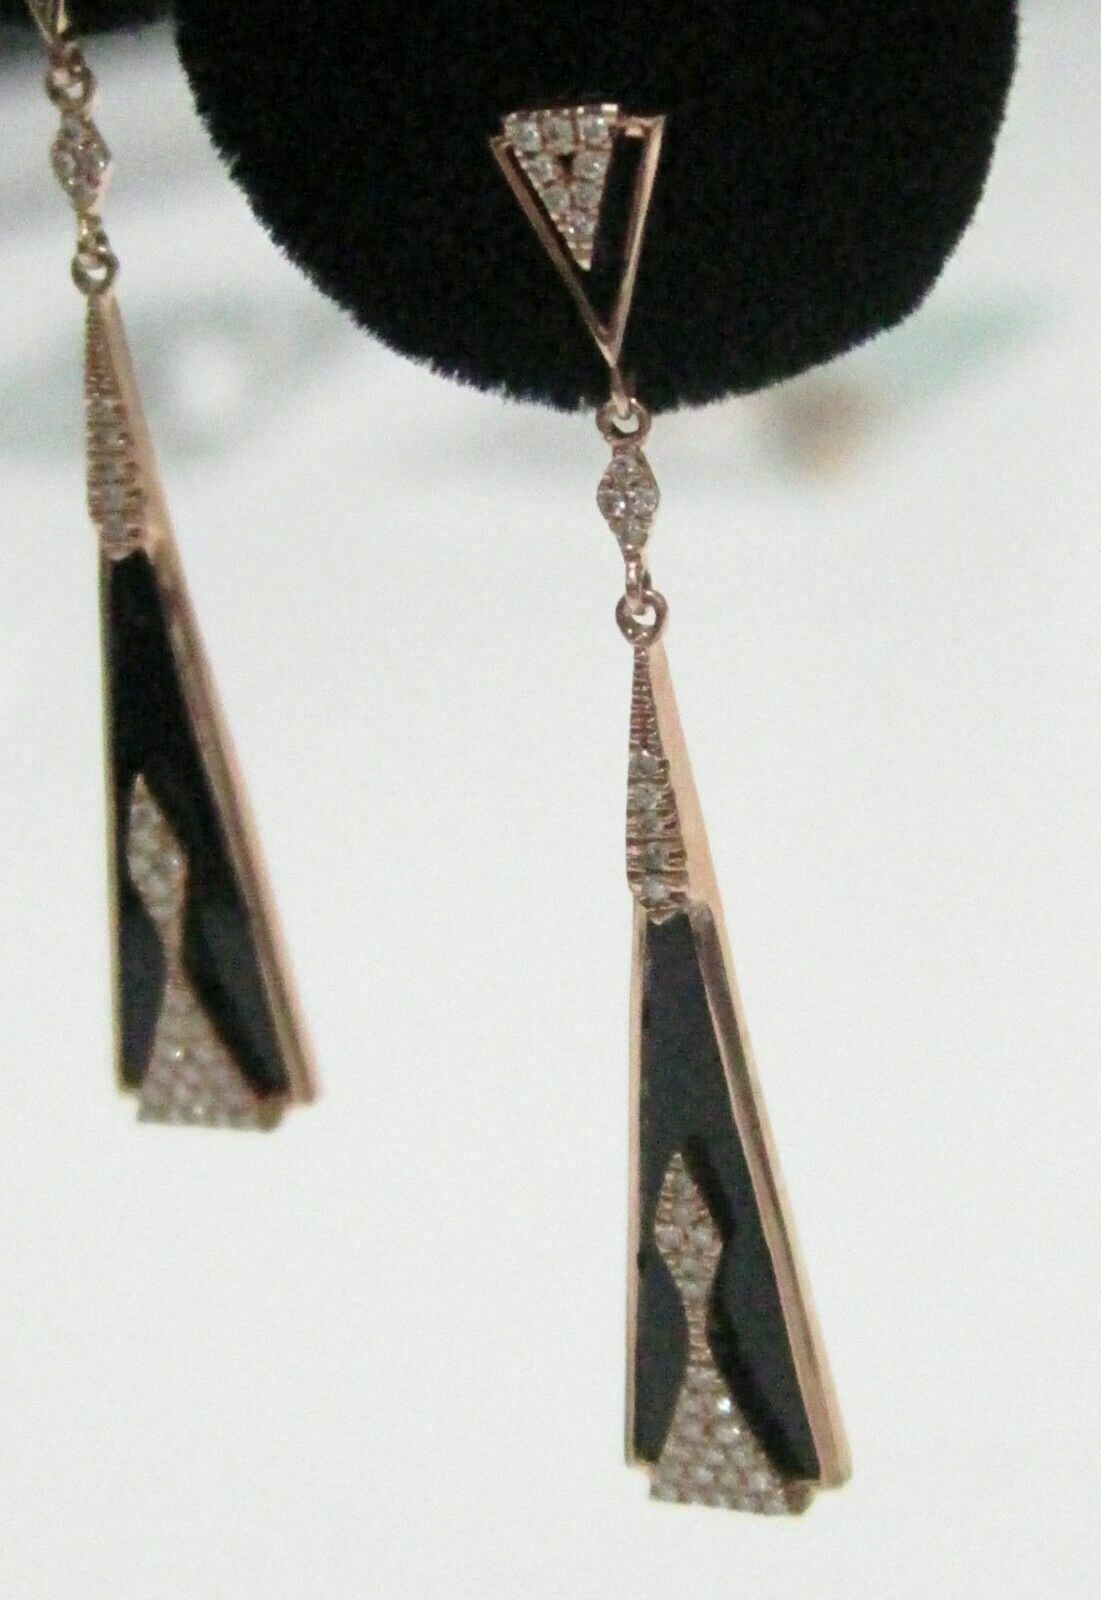 .22 TCW Natural Elongated BLACK ONYX Diamond Dangle Earrings 14kt Rose Gold